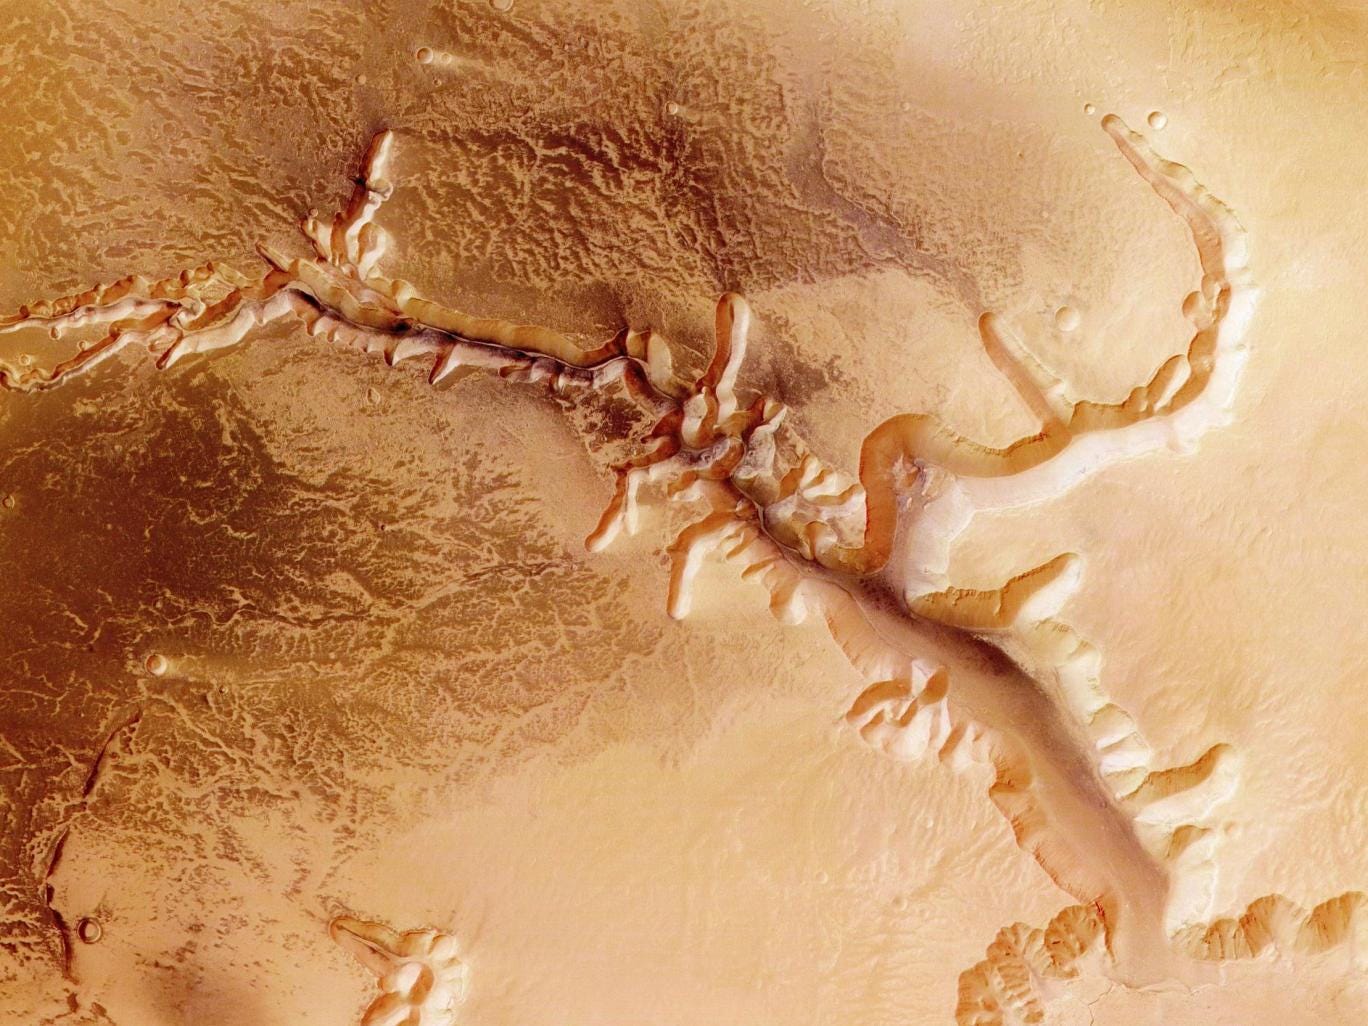 mars-echus-chasma-water-source.jpg